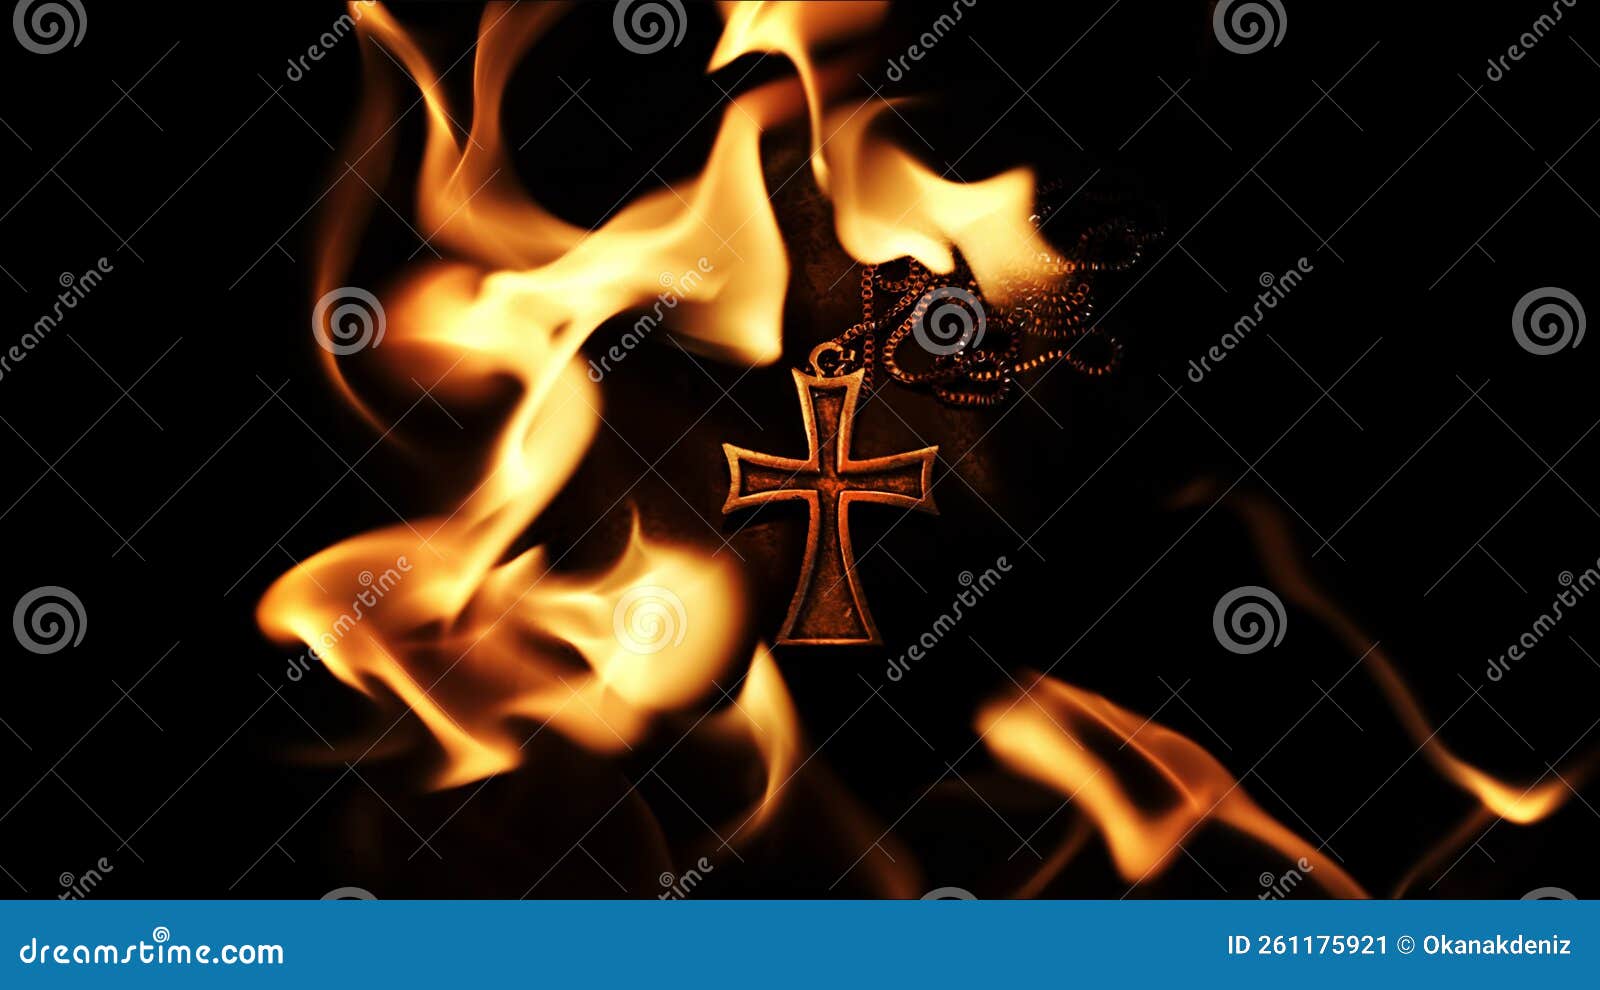 Christian Symbol Cross on Fire Stock Image - Image of burn, bright ...